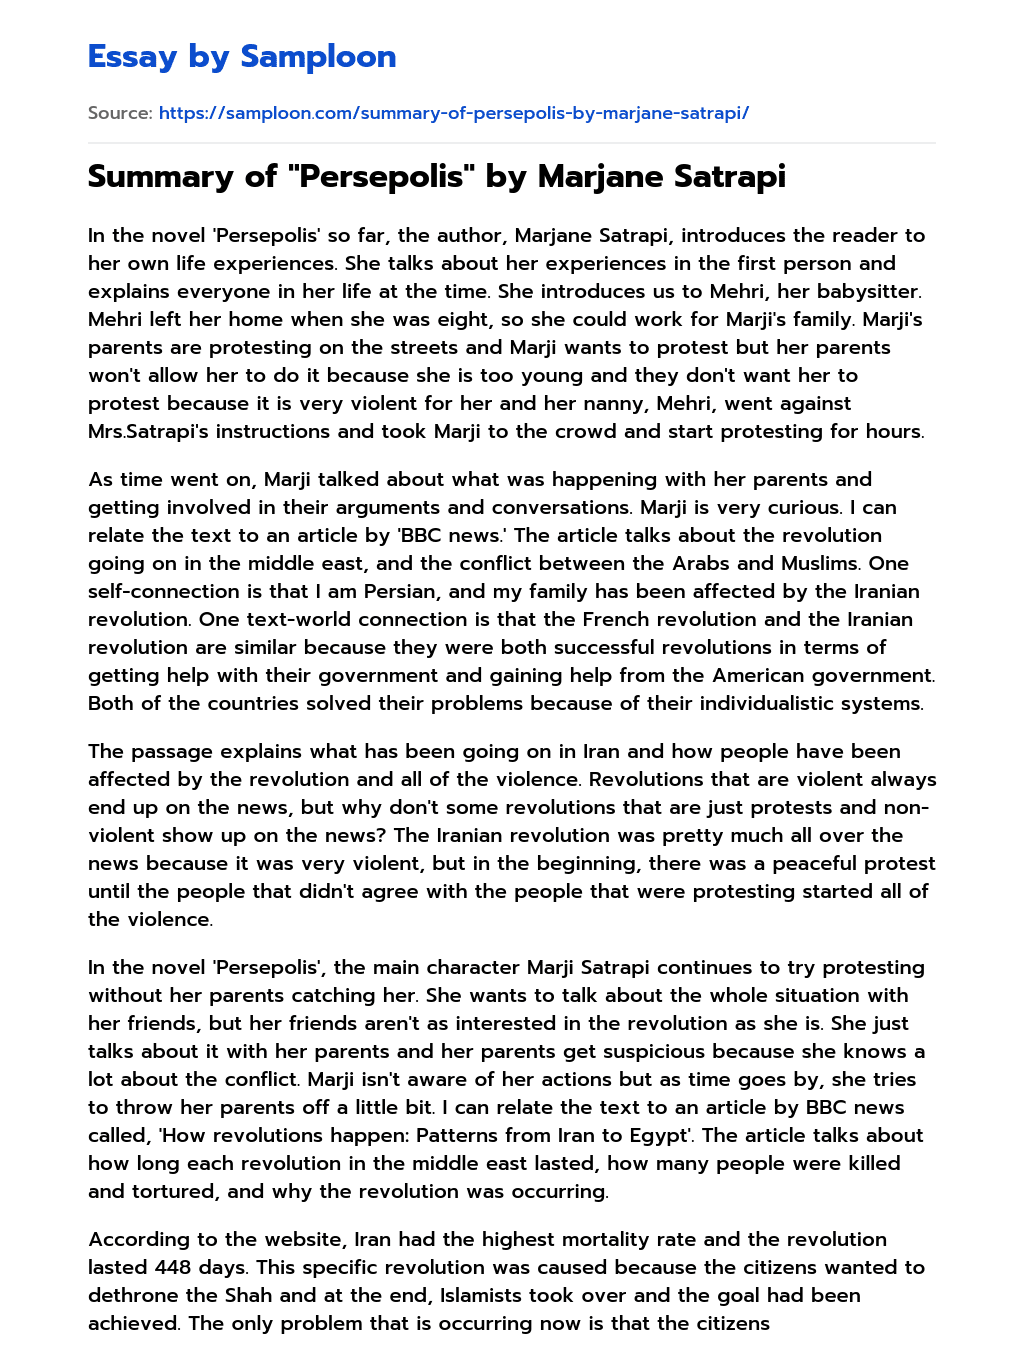 Summary of “Persepolis” by Marjane Satrapi essay